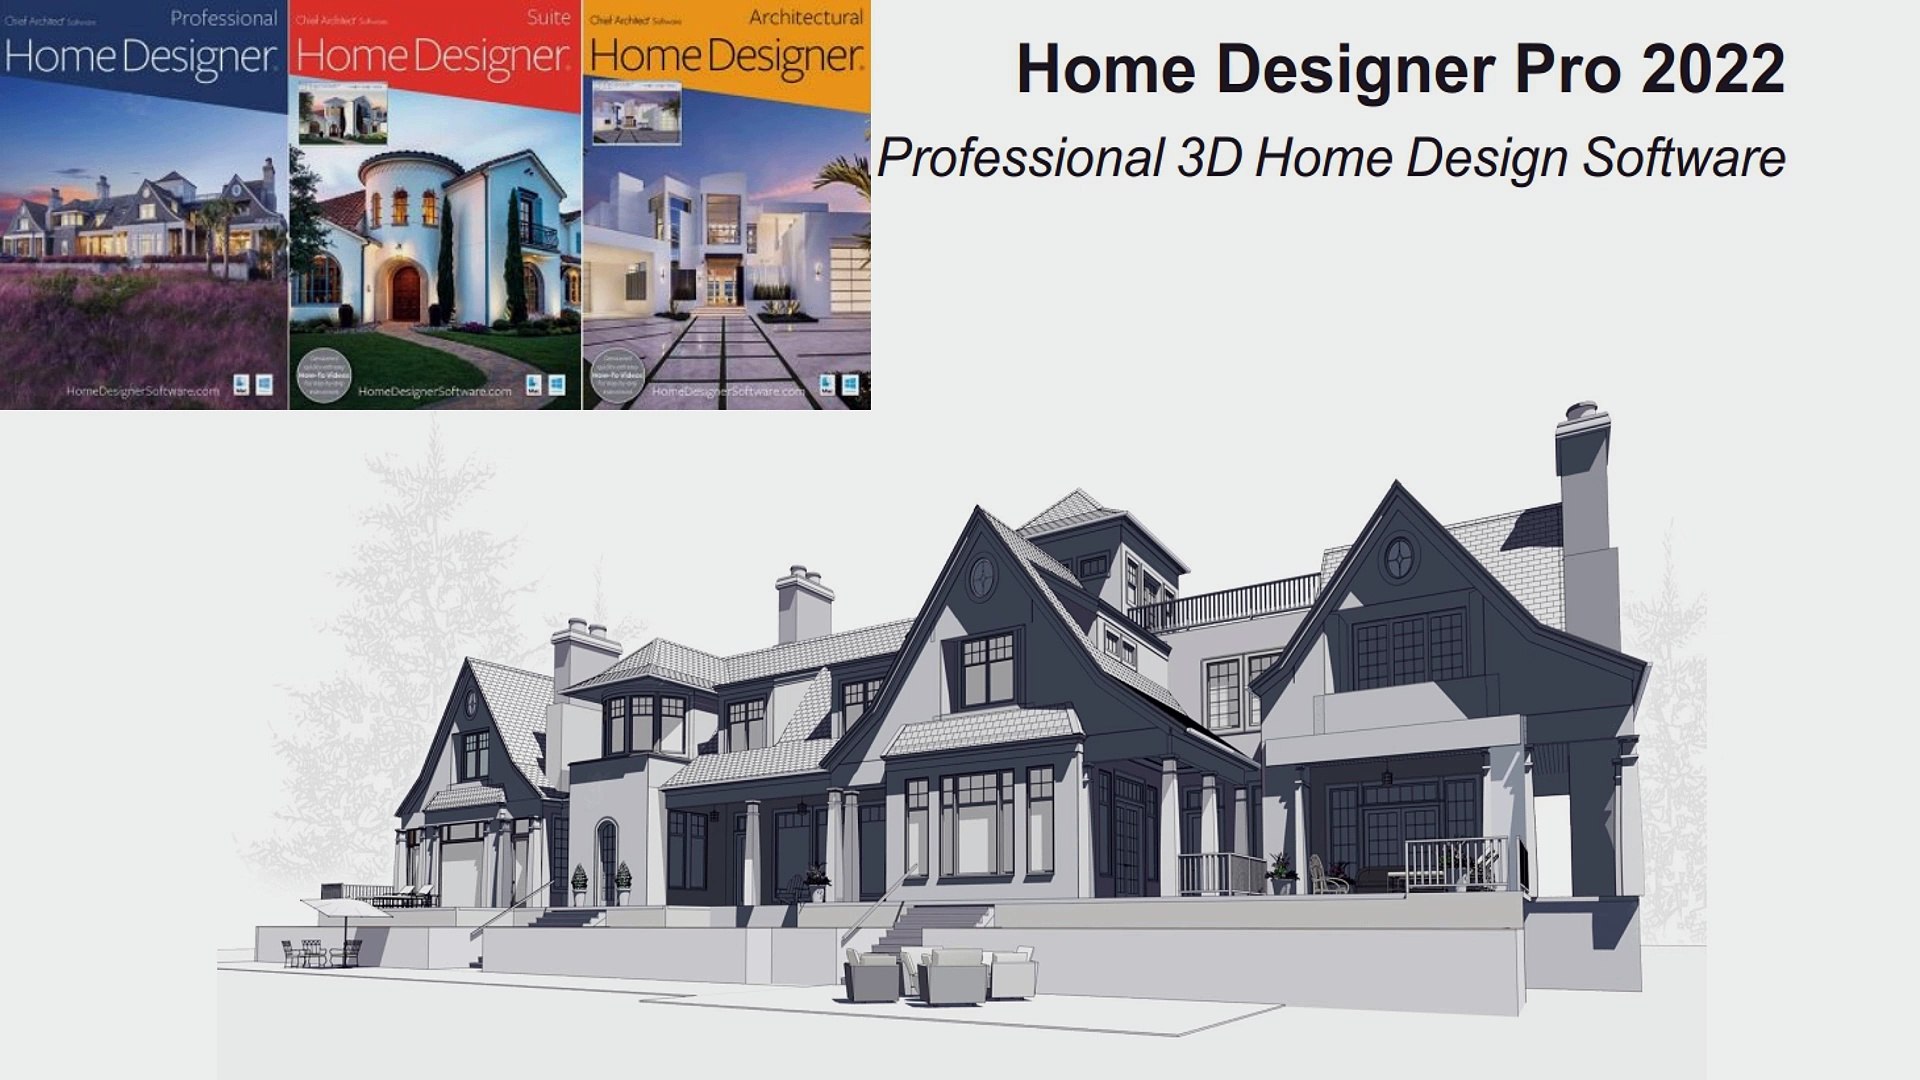 Home Designer 2022 New Features Summary | Professional Home Design Software  | Home Designer 2022 | Home Designer Pro | Home Designer | Installation - Home  Designer | Home Designer Professional - video Dailymotion